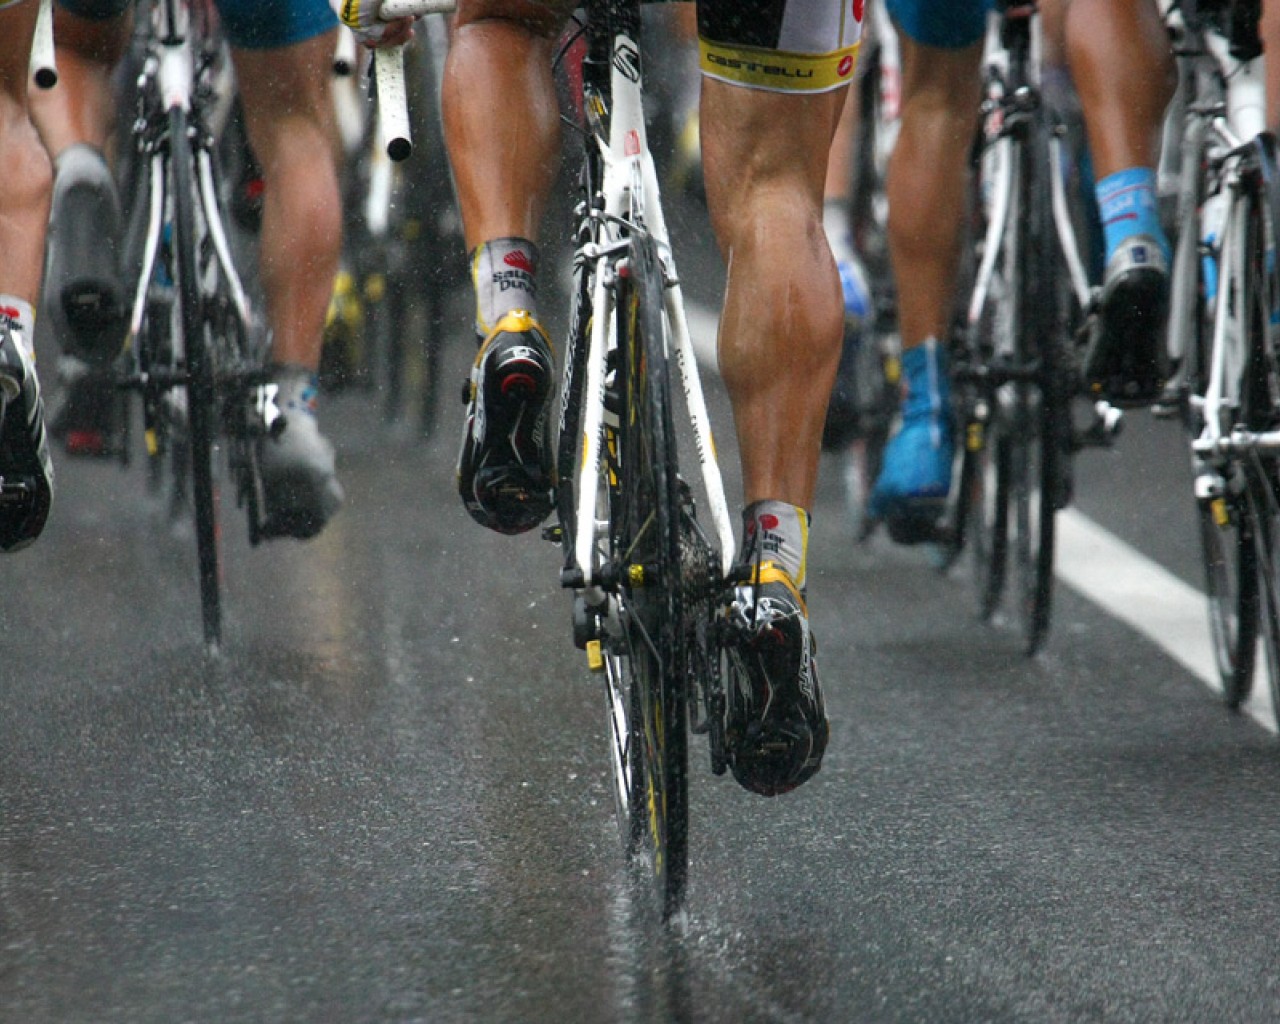 ScreenHeaven Tour de France bicycles cycling legs sports